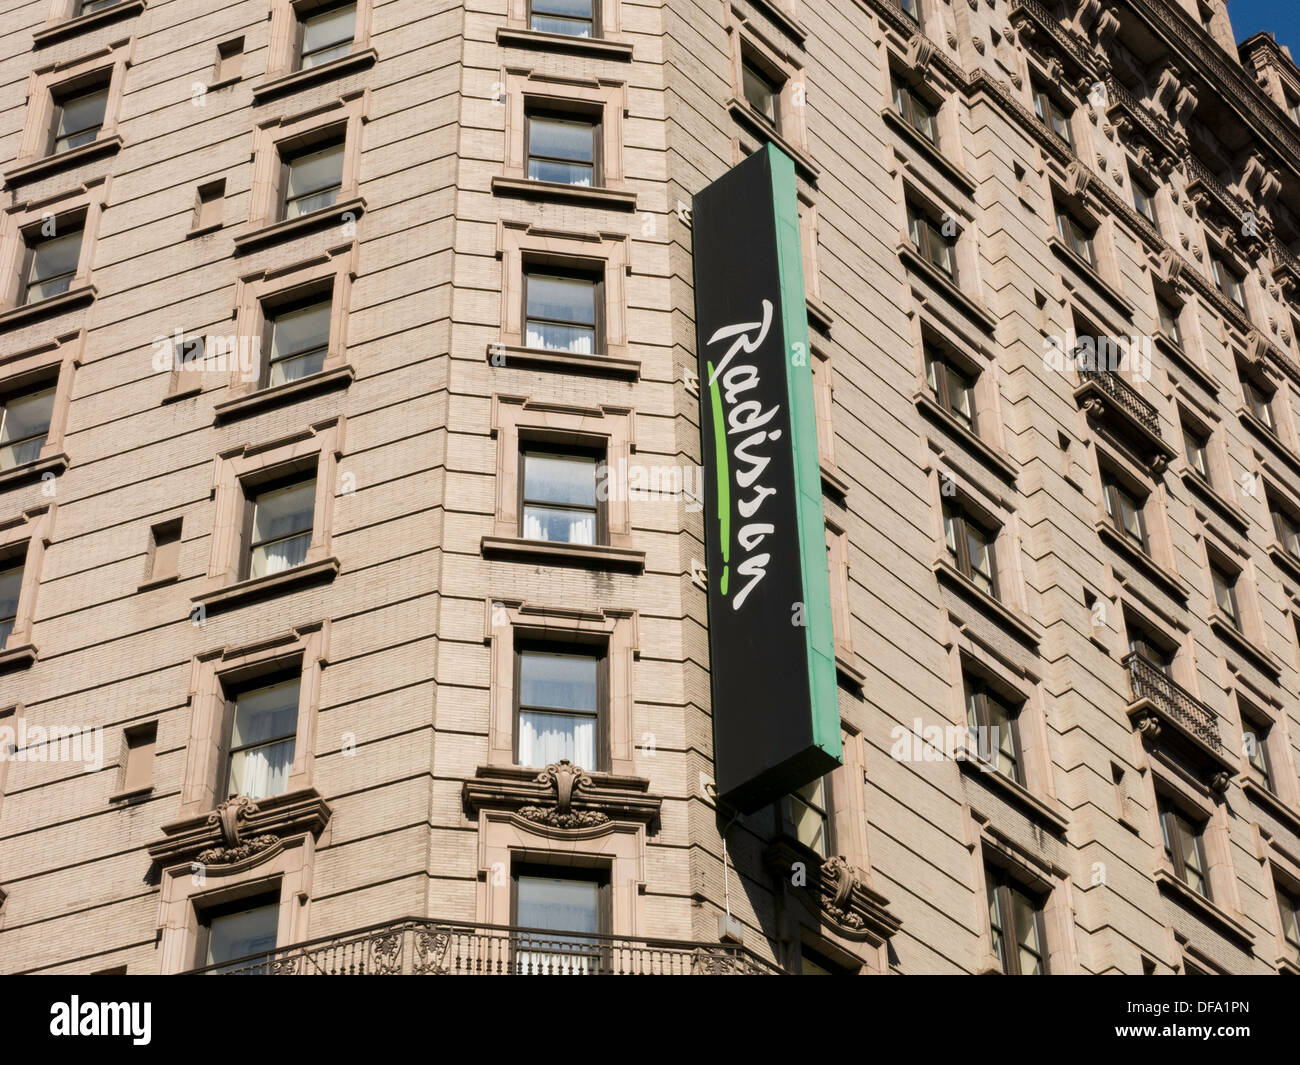 The Radisson Martinique Hotel Facade in New York City Stock Photo